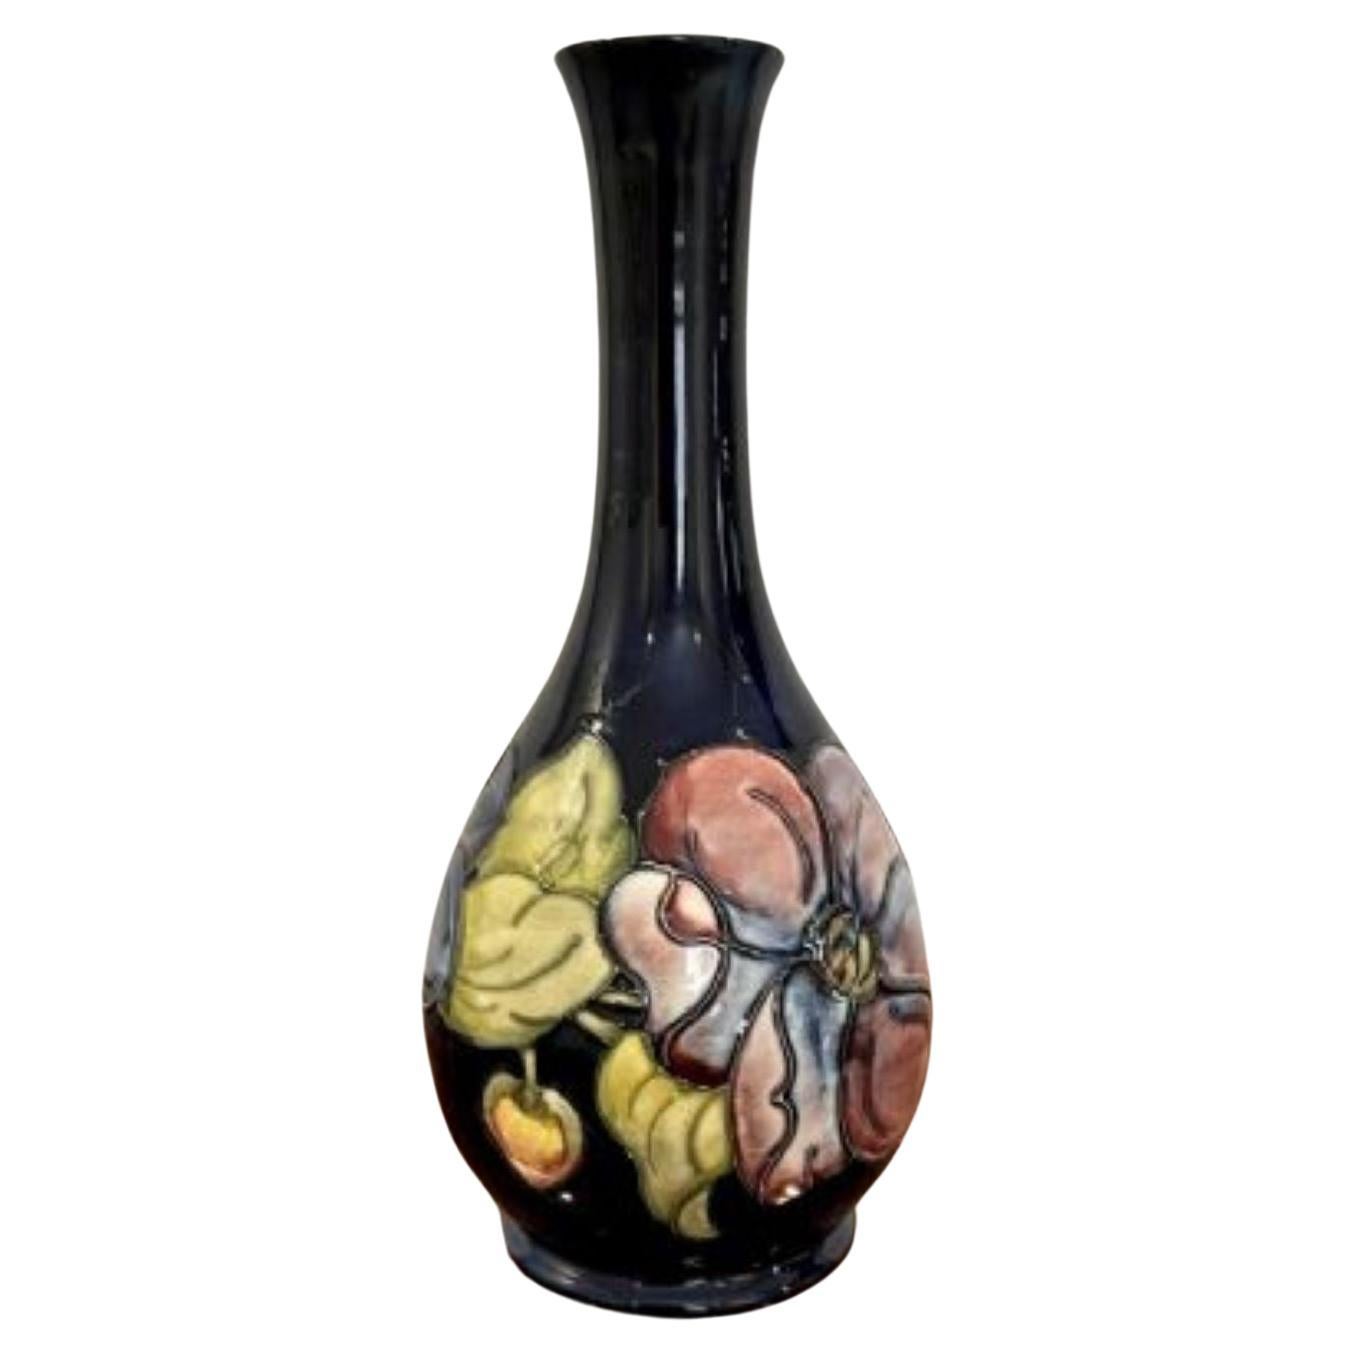 Atemberaubende Moorcroft-Vase in antiker Qualität 